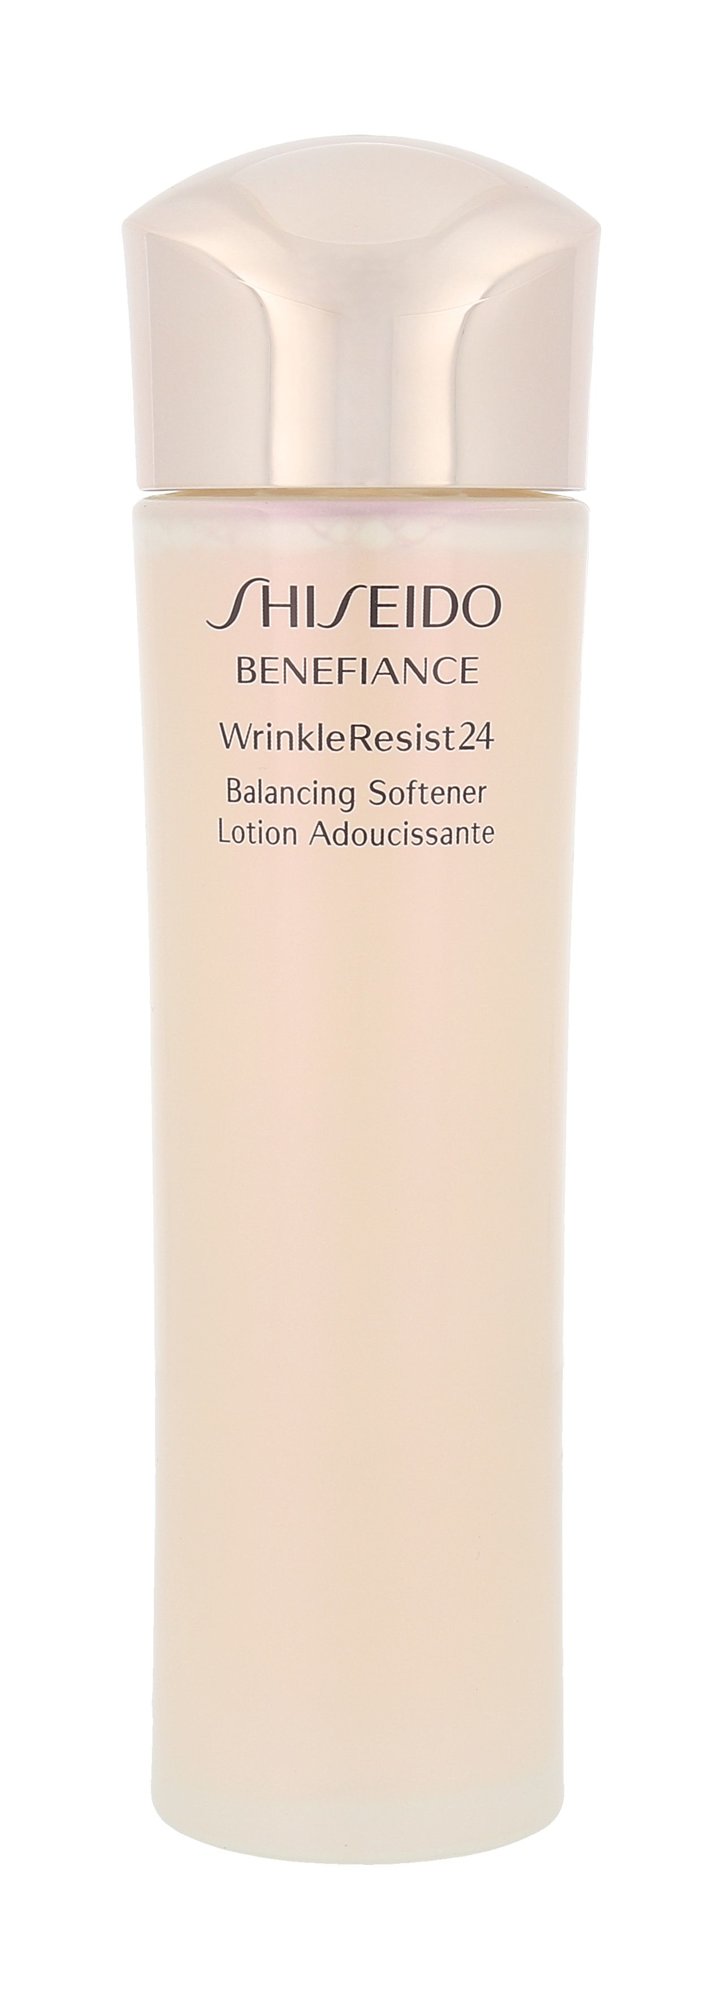 Shiseido Benefiance Wrinkle Resist 24 Balancing Softener valomasis vanduo veidui